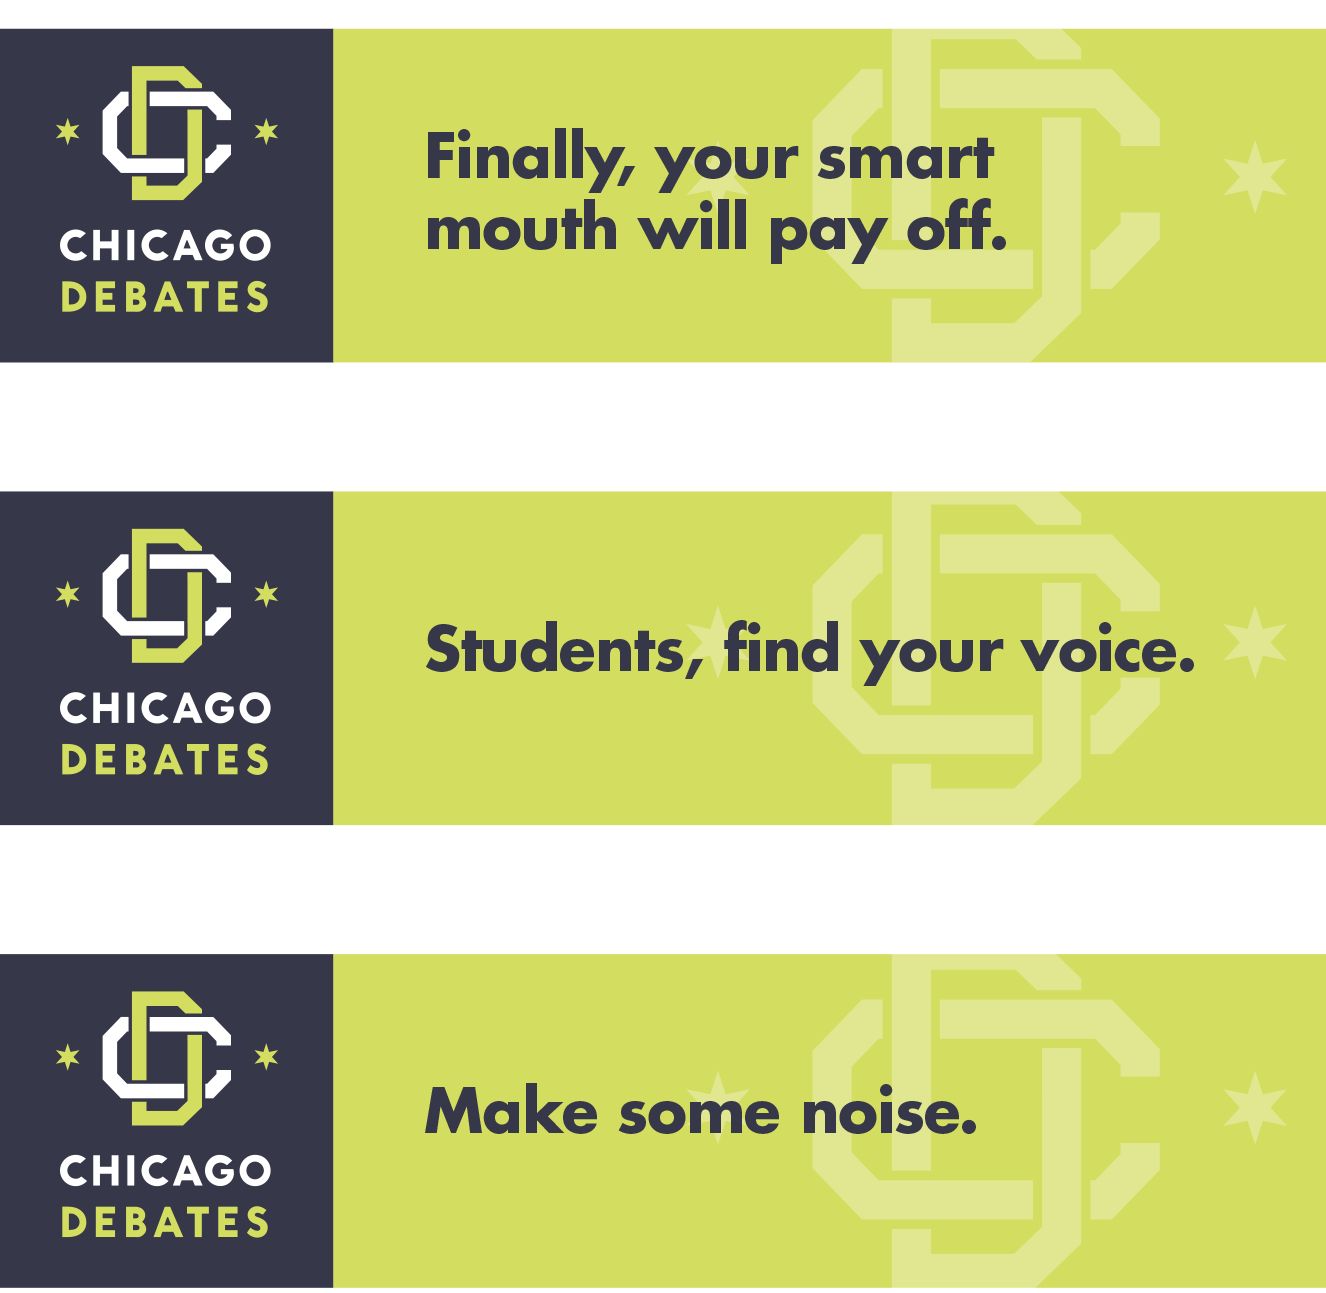 Chicago Debates banners